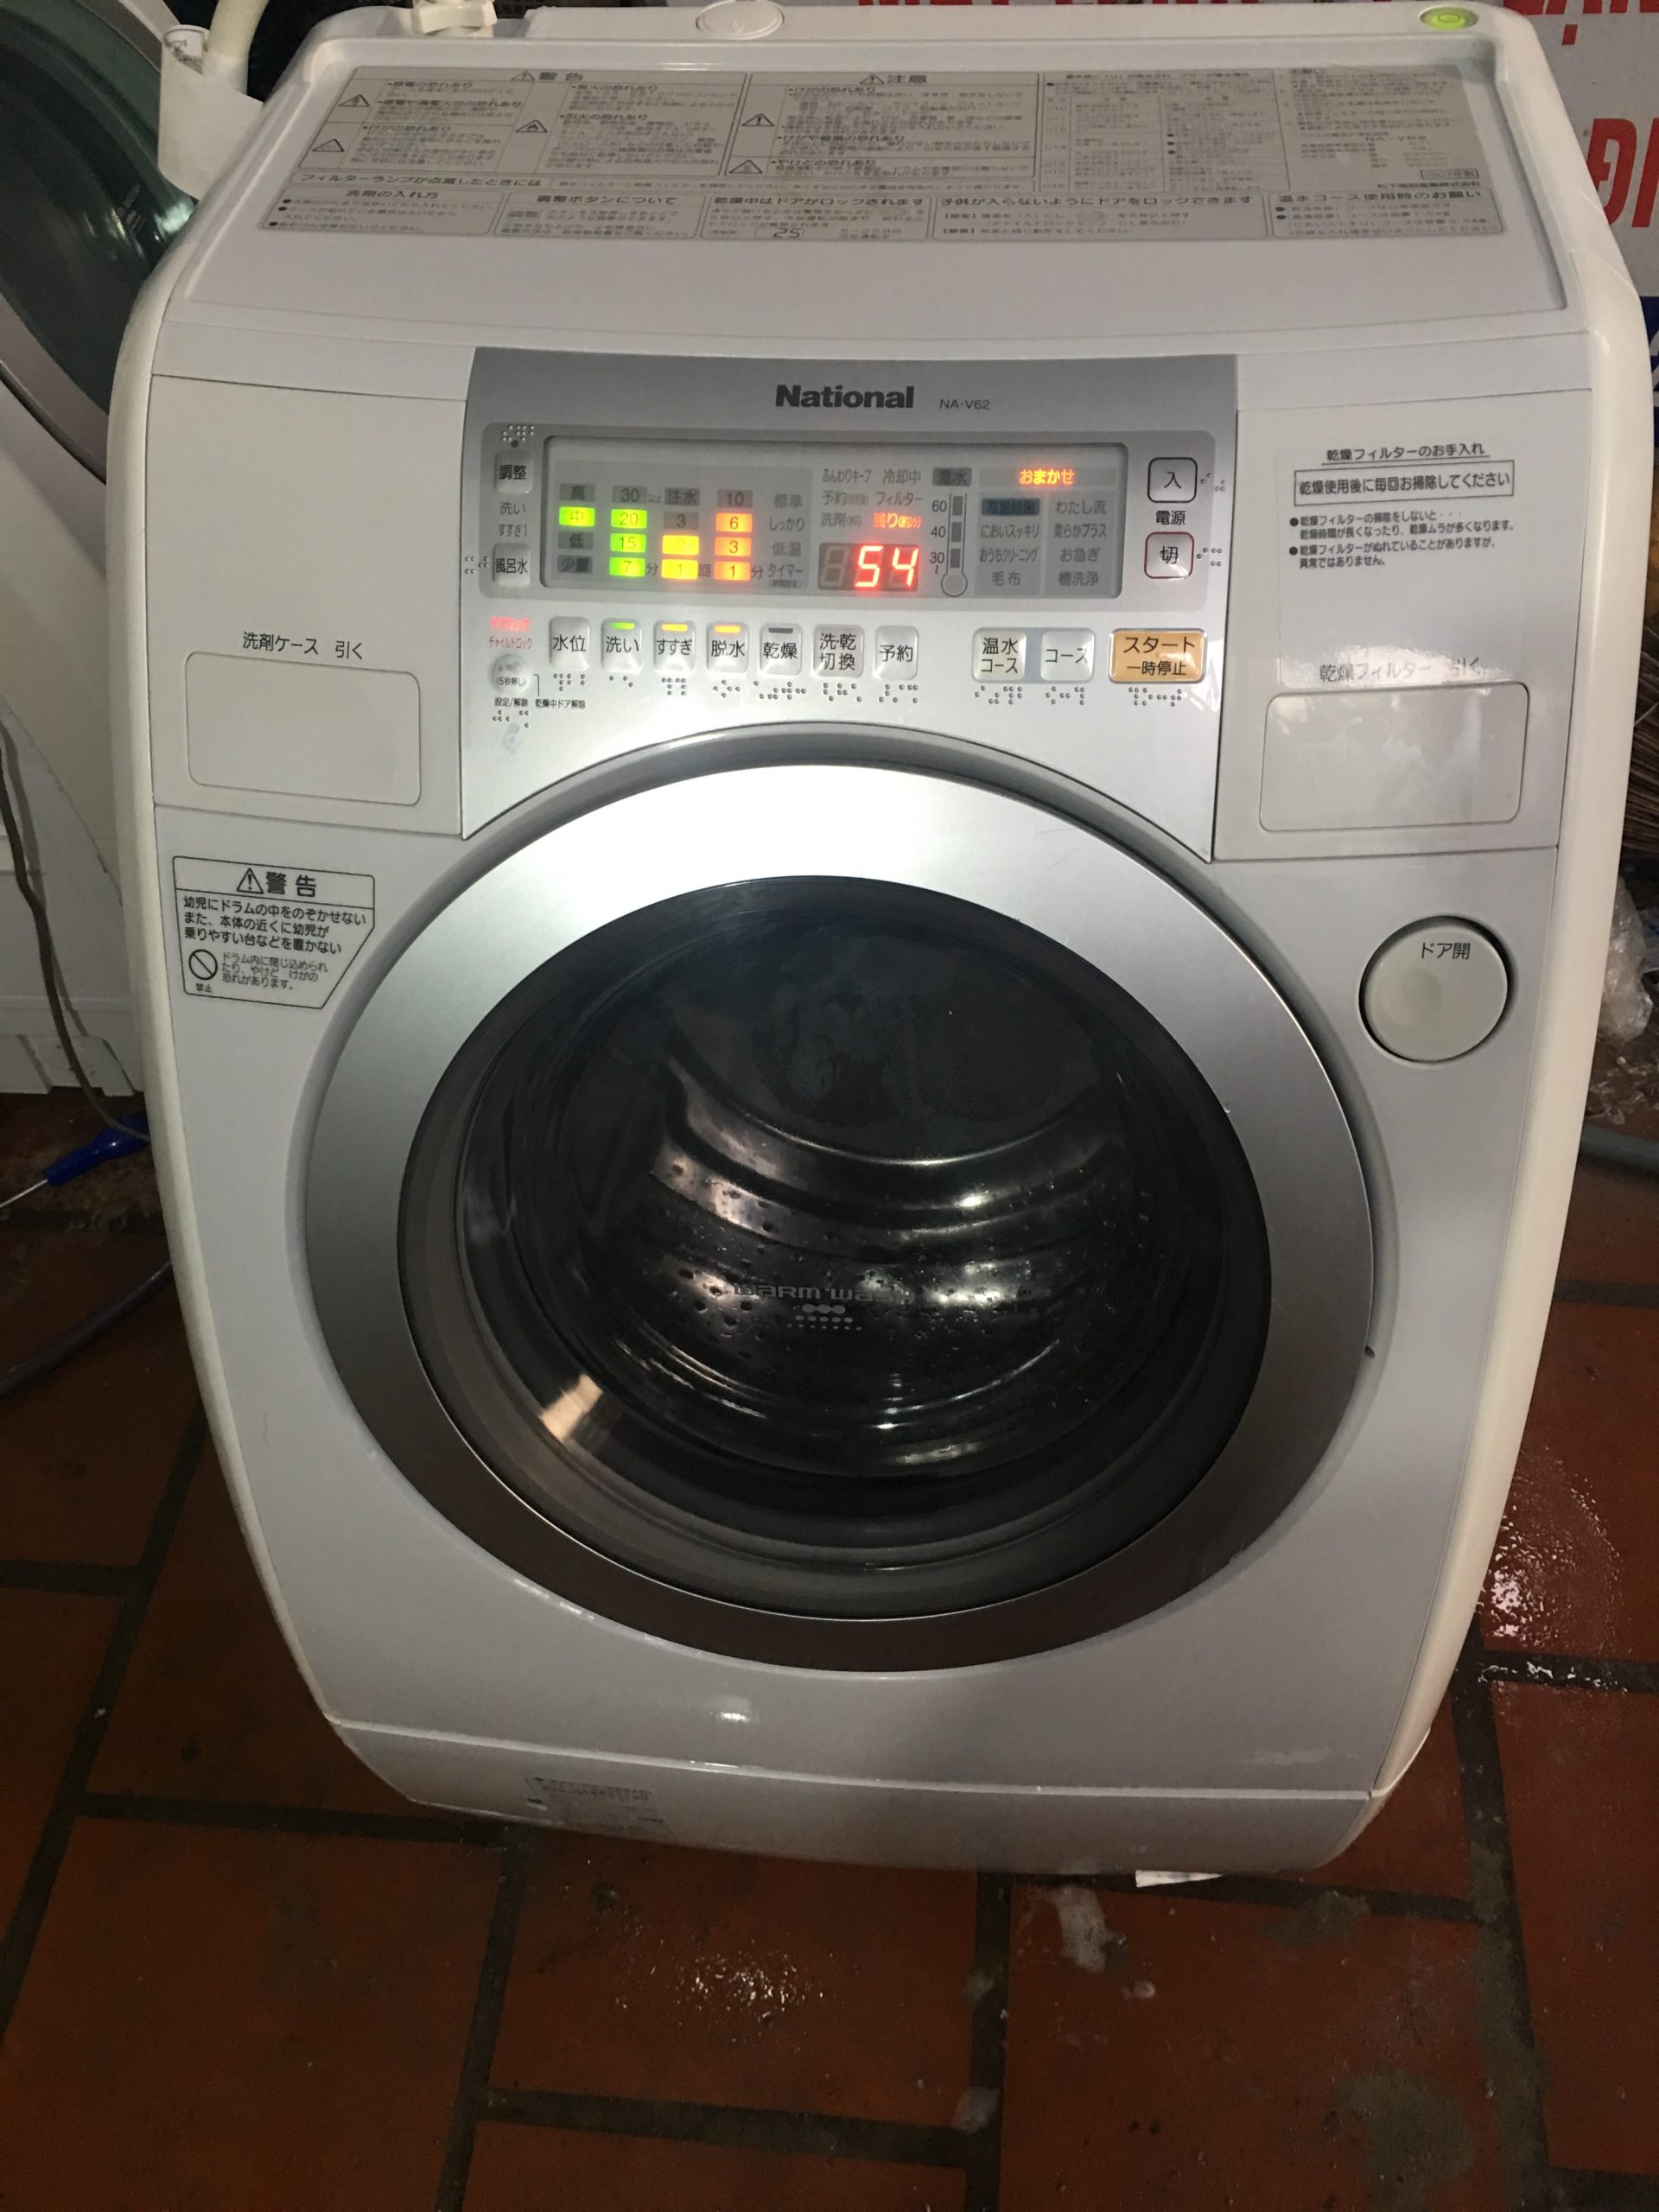 lỗi e4 máy giặt toshiba